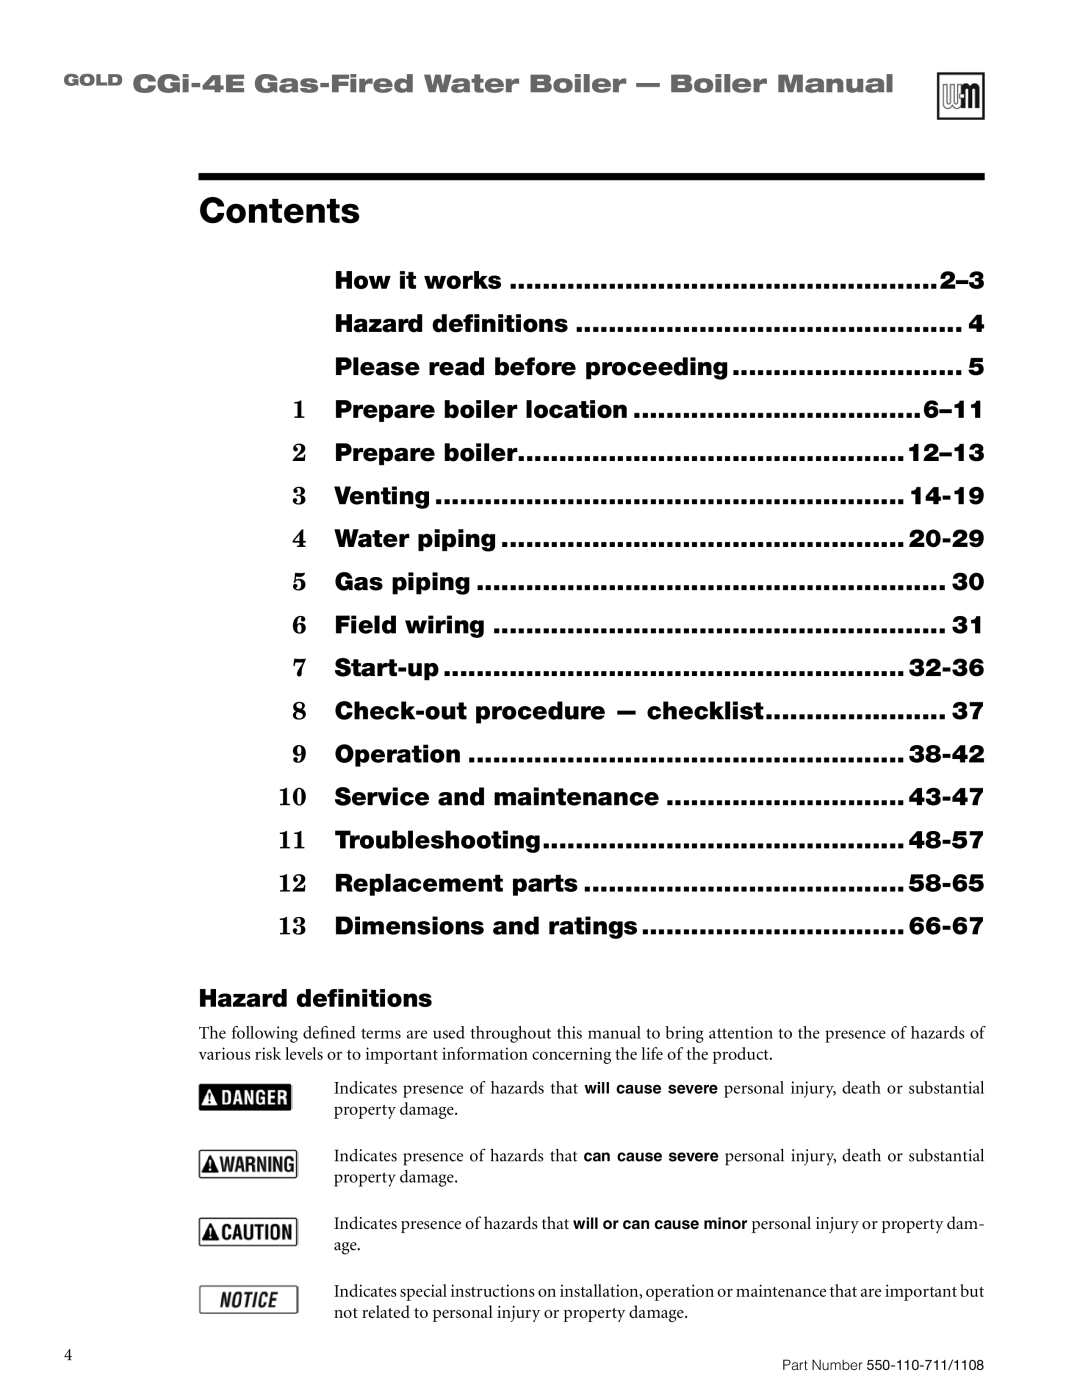 Weil-McLain CGI-4E manual Contents, GOLD CGi-4E Gas-FiredWater Boiler - Boiler Manual 